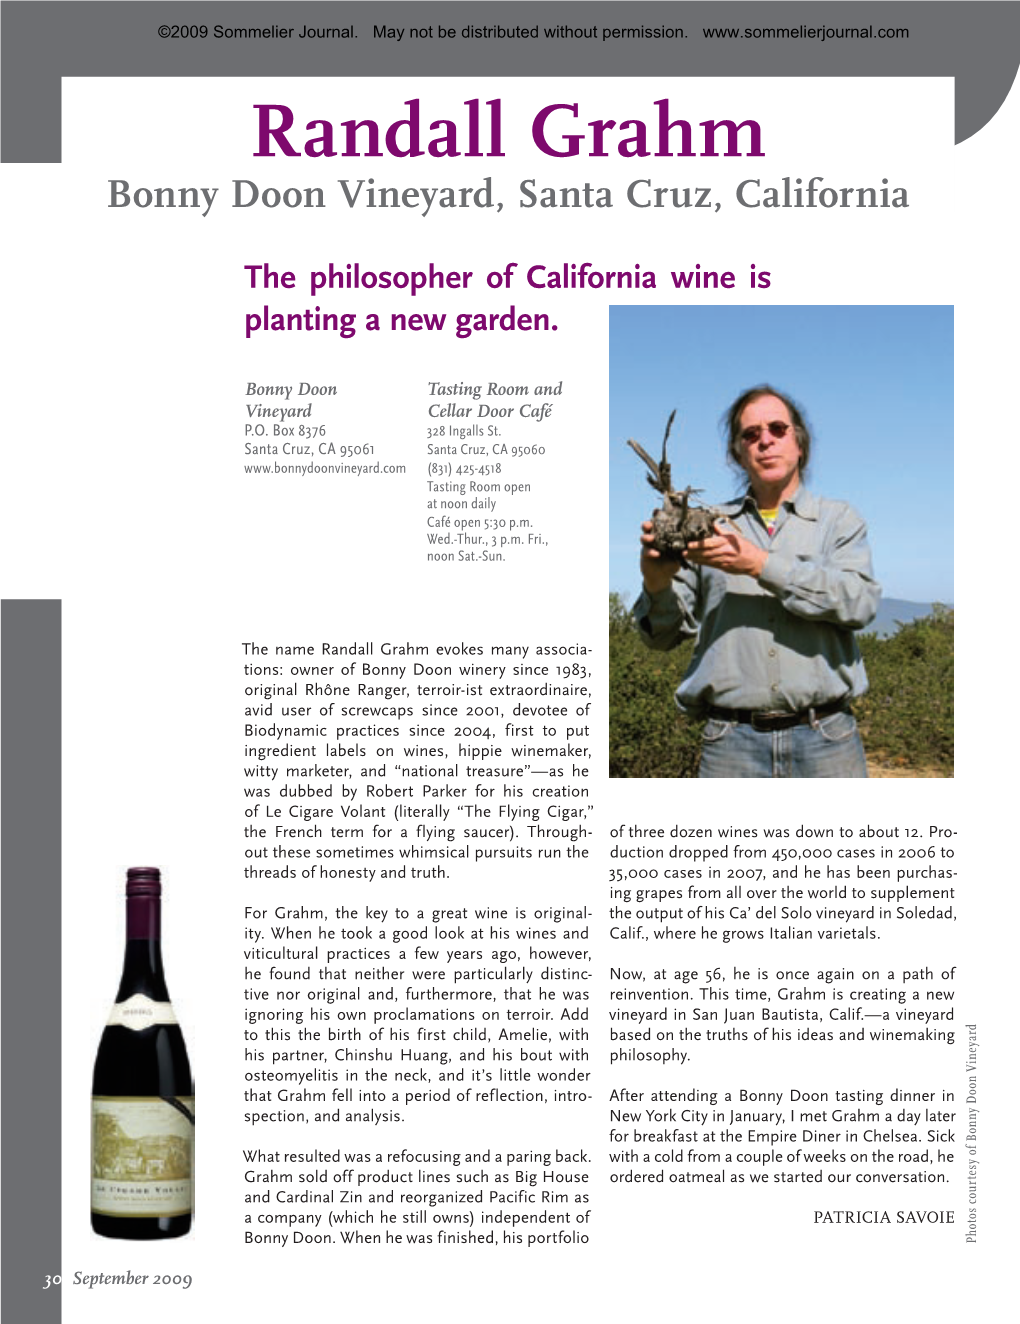 Randall Grahm Bonny Doon Vineyard, Santa Cruz, California